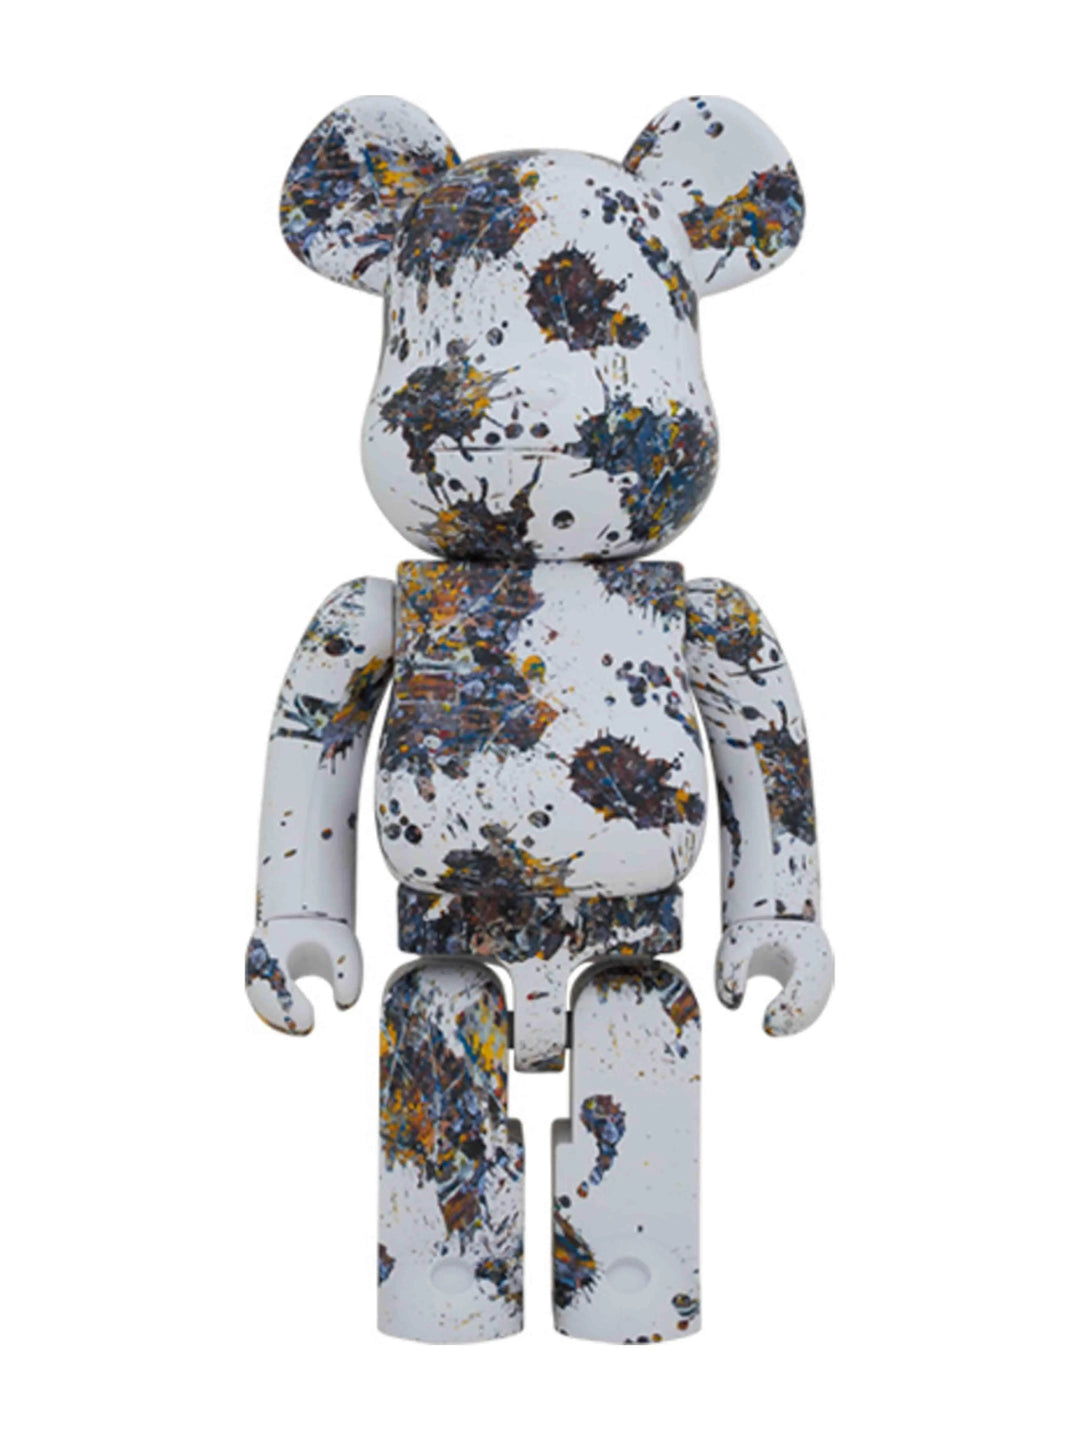 Medicom Toy Be@arbrick Jackson Pollock Studio Splash 1000% Prior